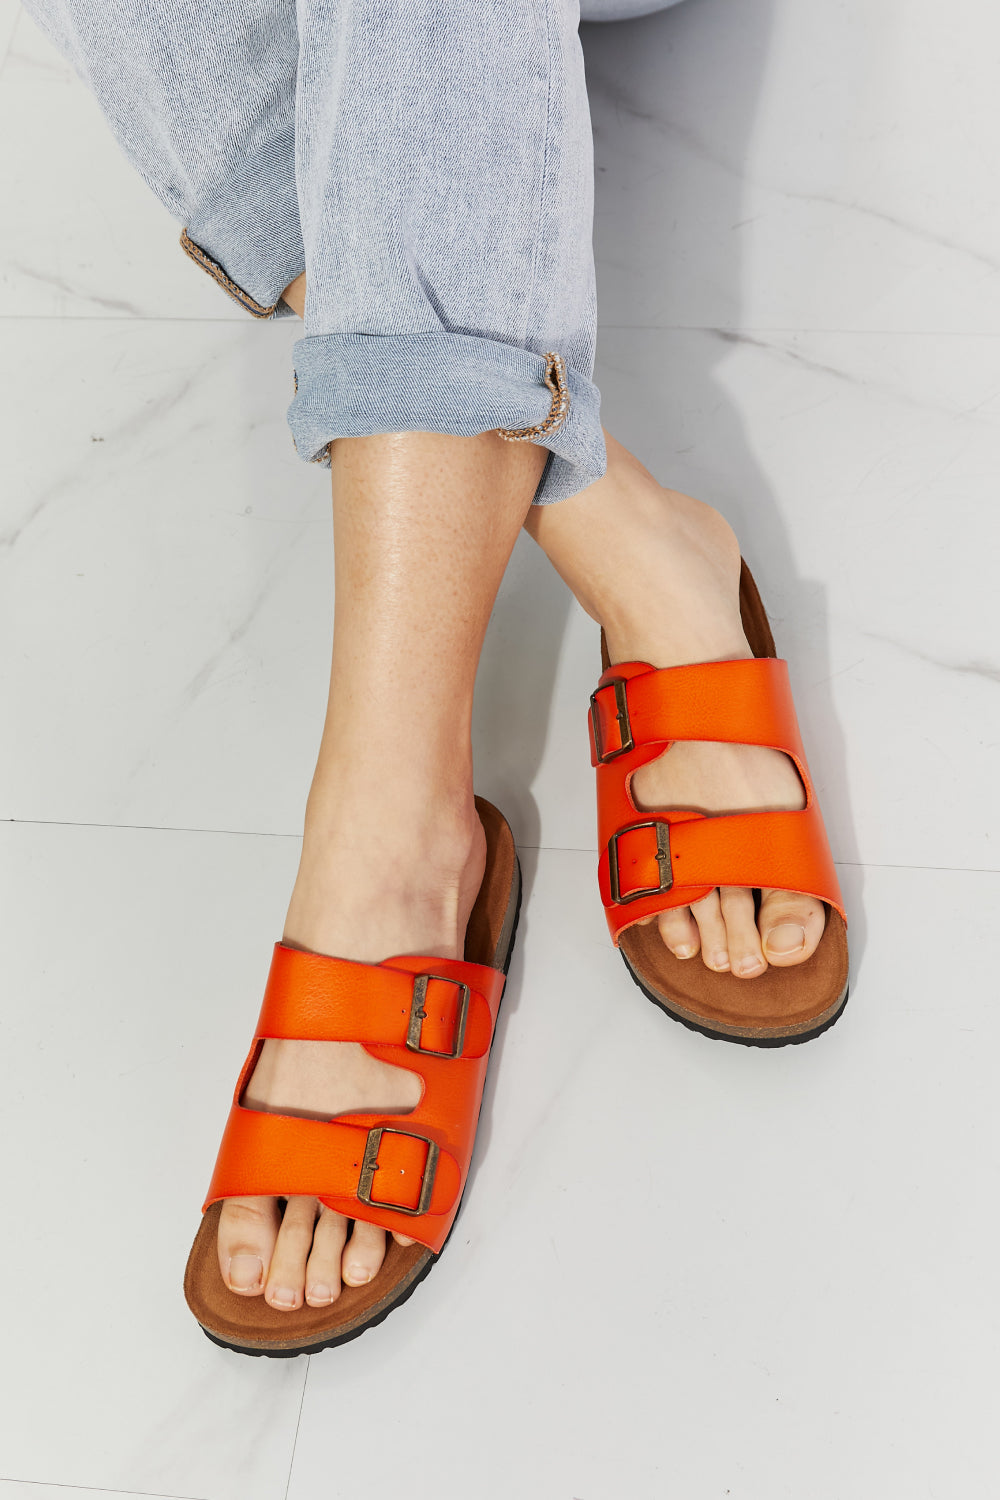 MMShoes Feeling Alive Double Banded Slide Sandals in Orange - Tigbul's Fashion